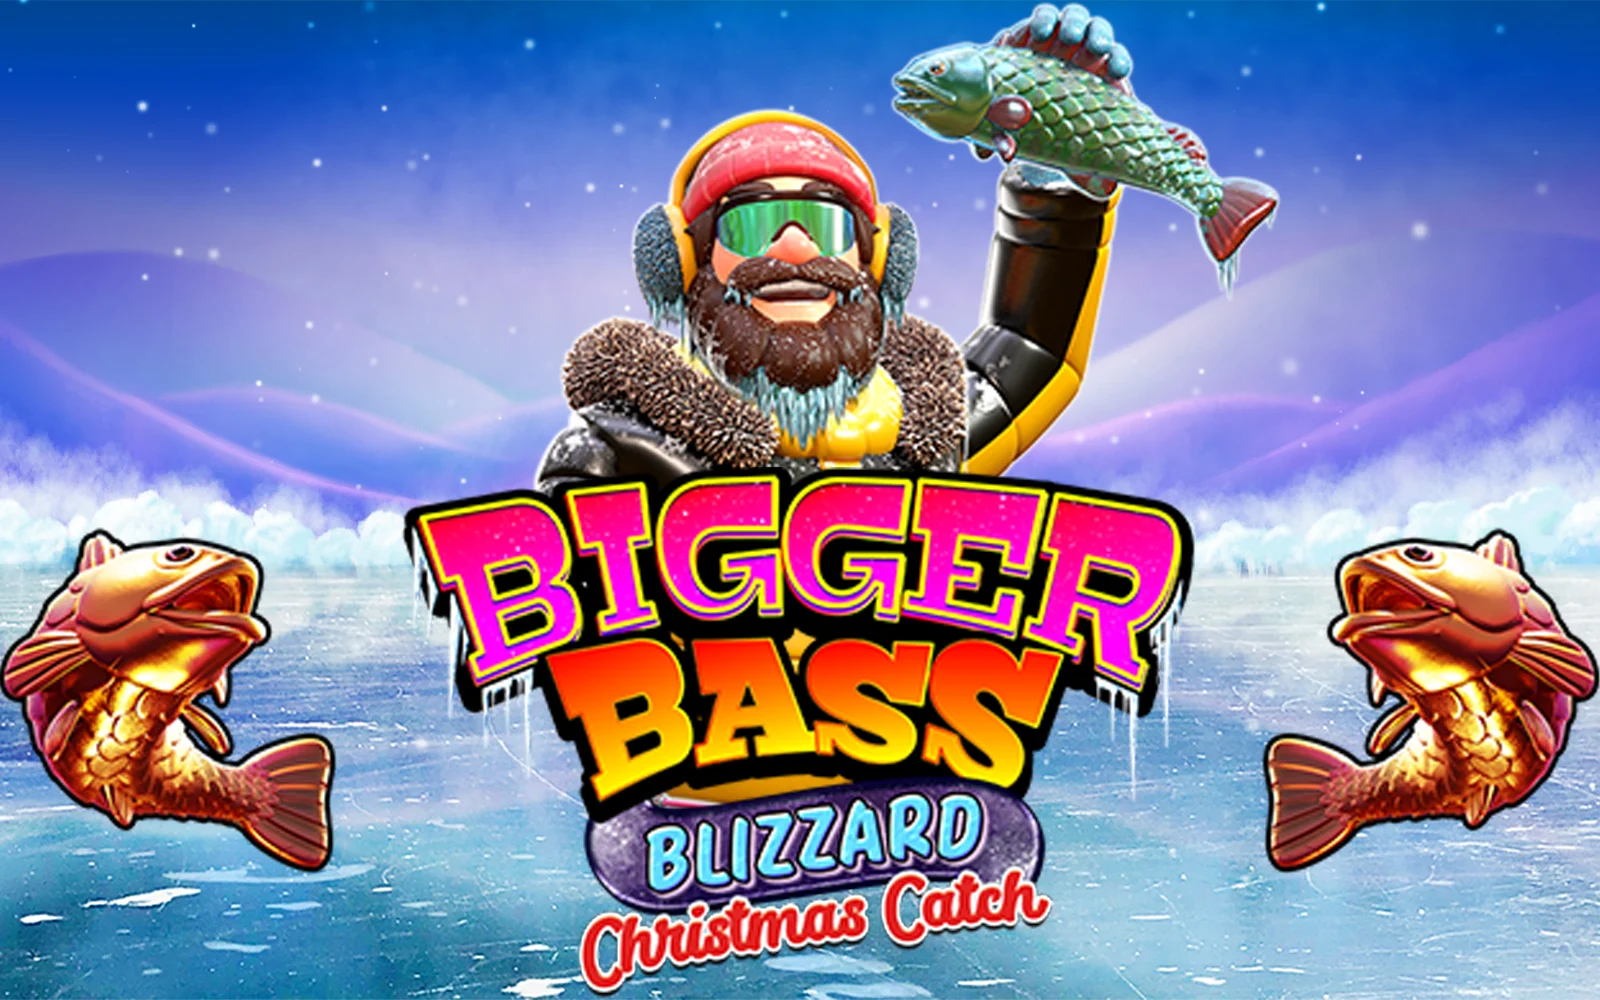 Gioca a Bigger Bass Blizzard - Christmas Catch™ sul casino online Starcasino.be